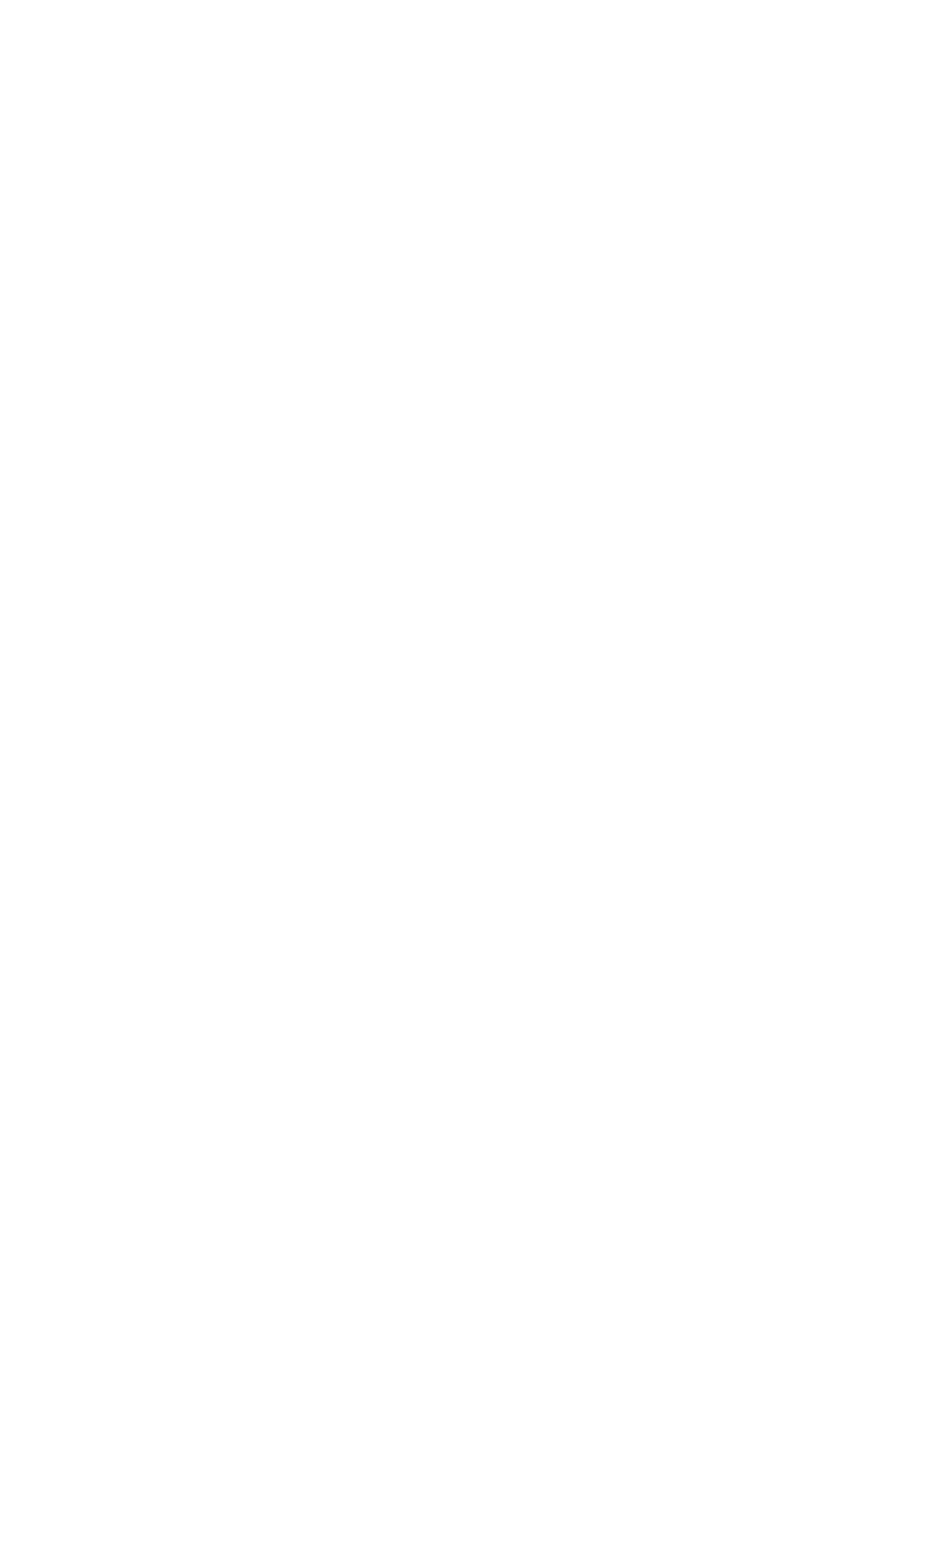 HomeBiogas logo pour fonds sombres (PNG transparent)